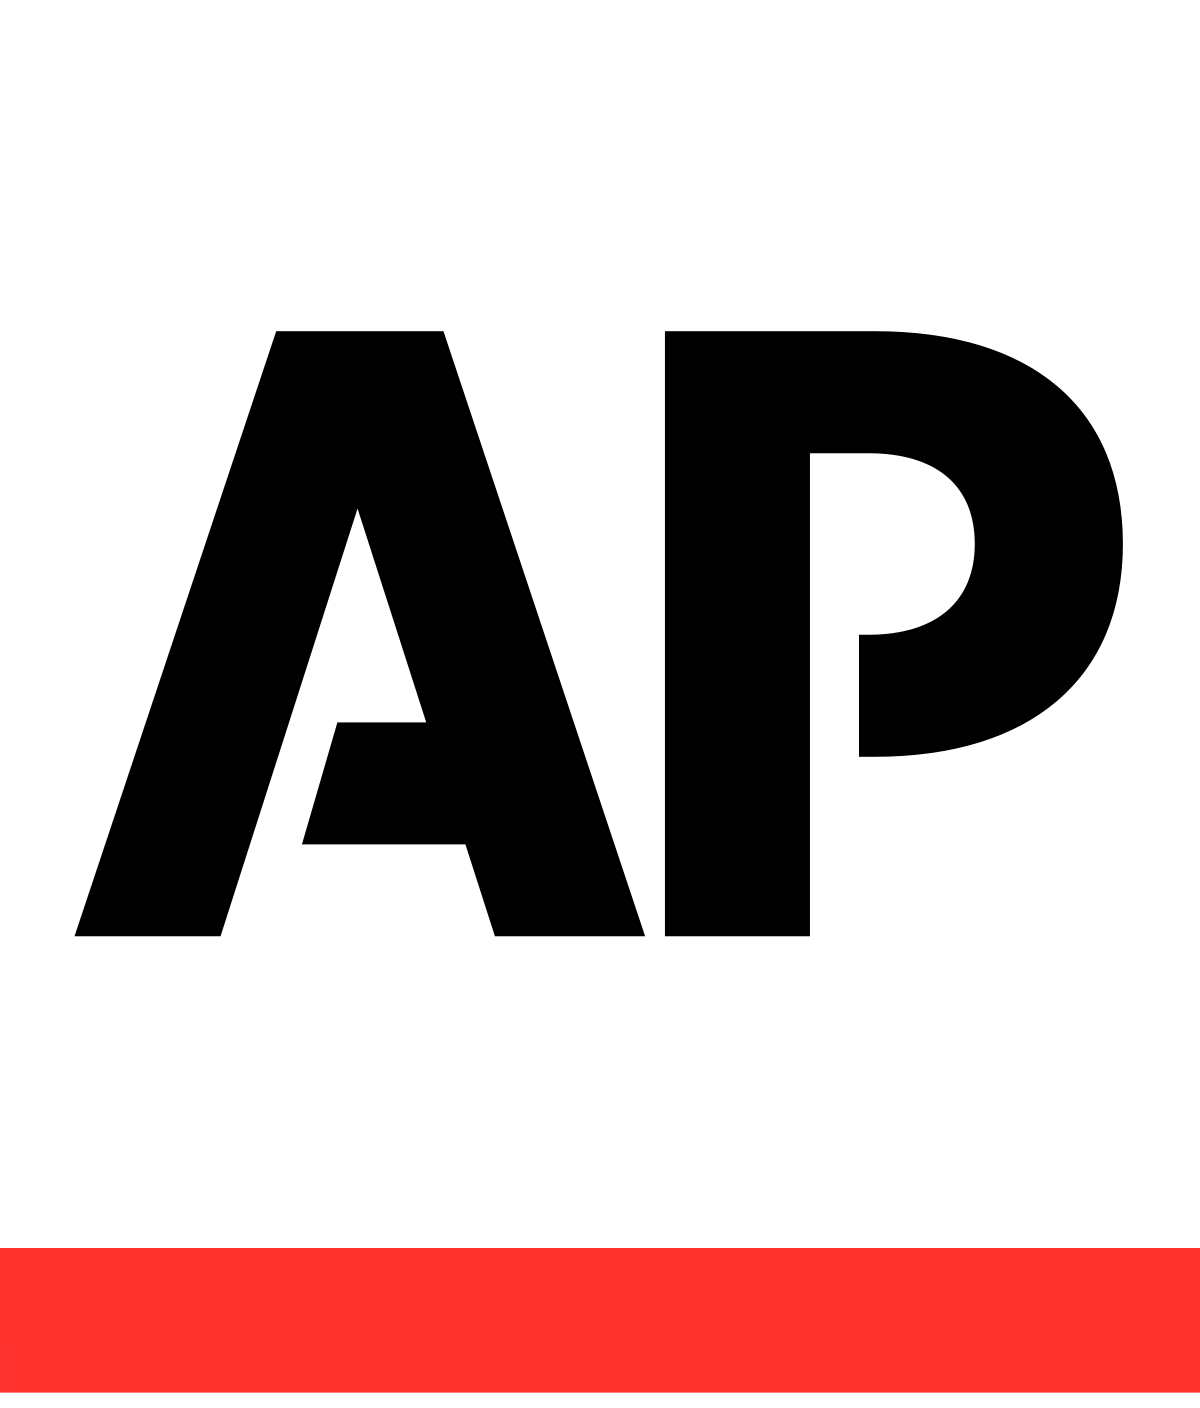 Associated Press - Wikipedia